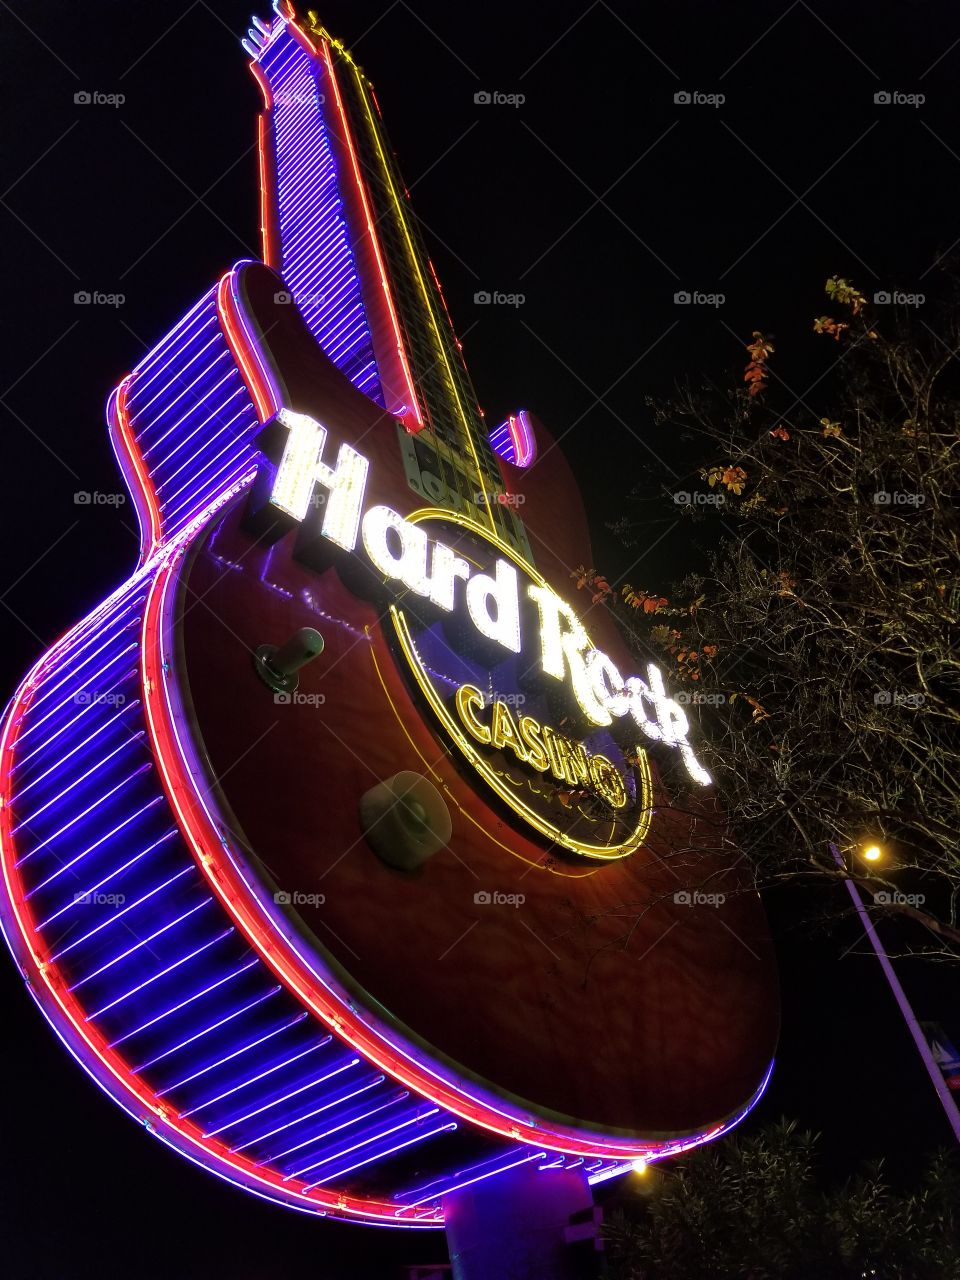 Hard Rock Casino, rocking those colors